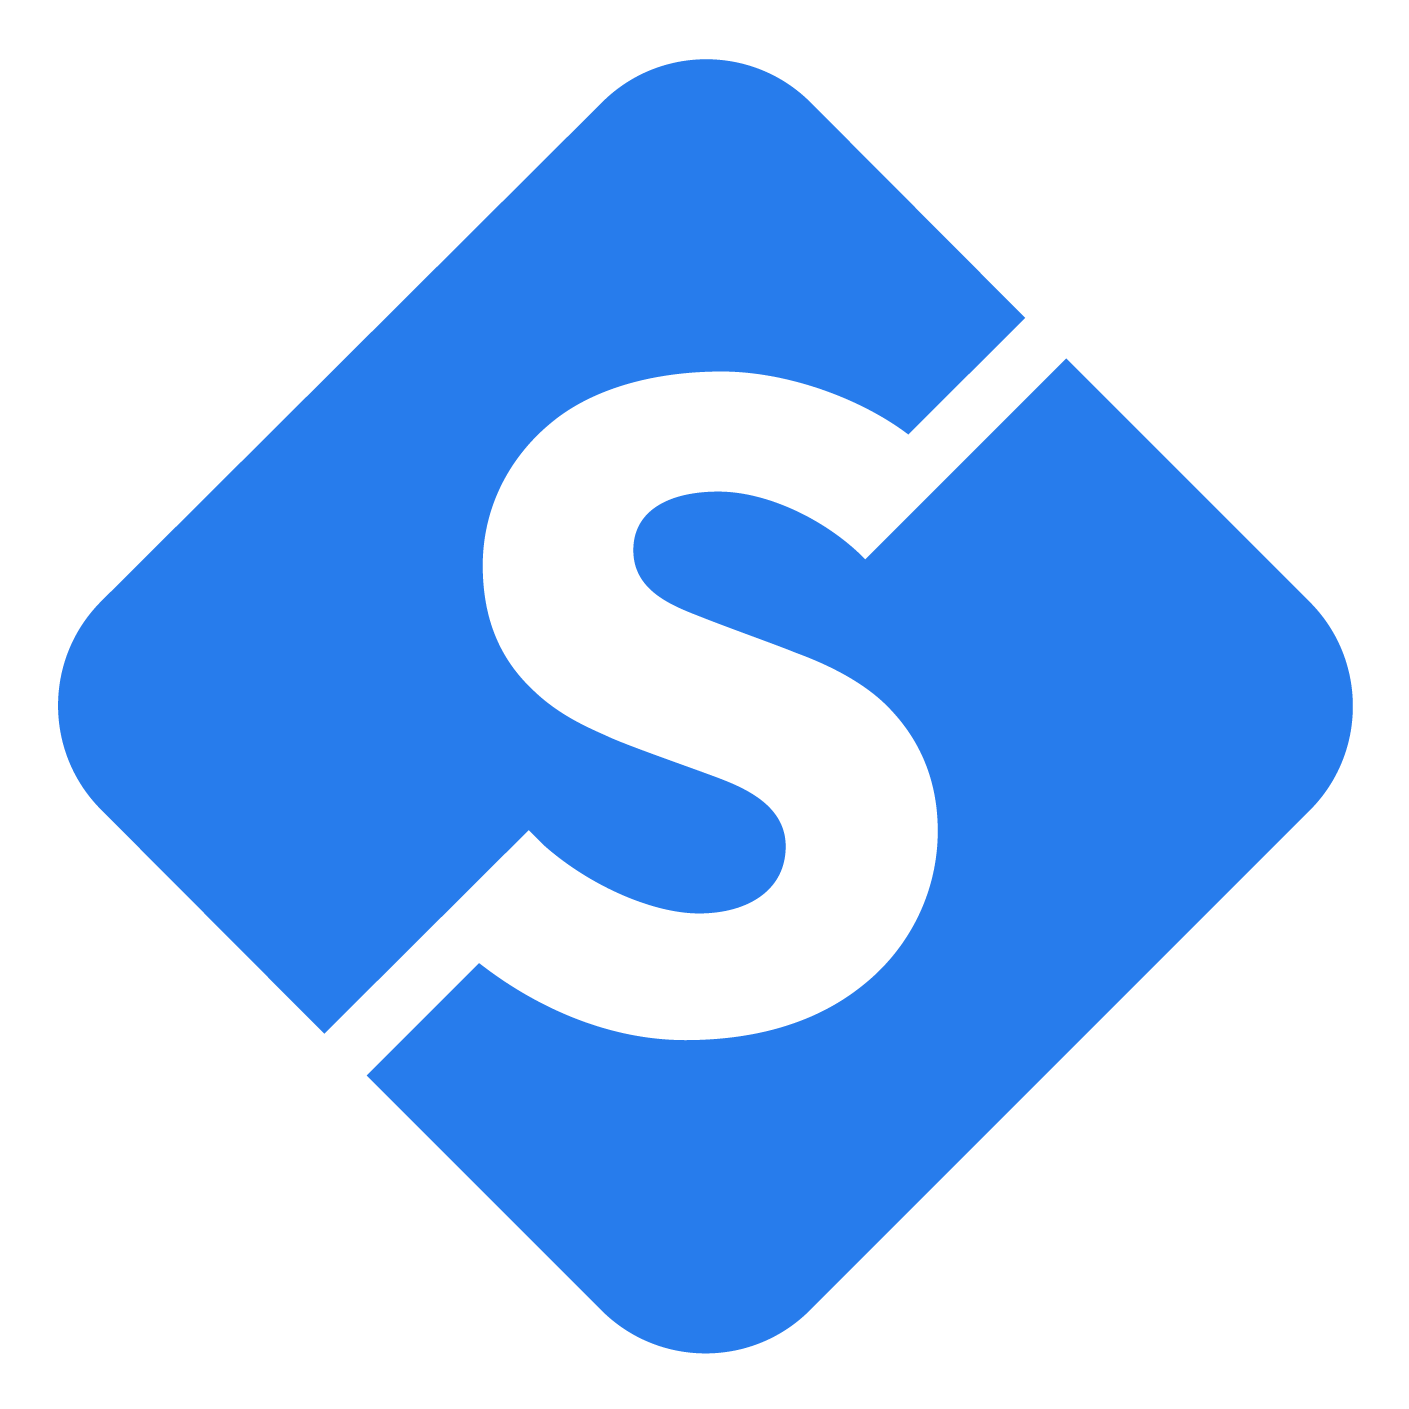 SovTech logo